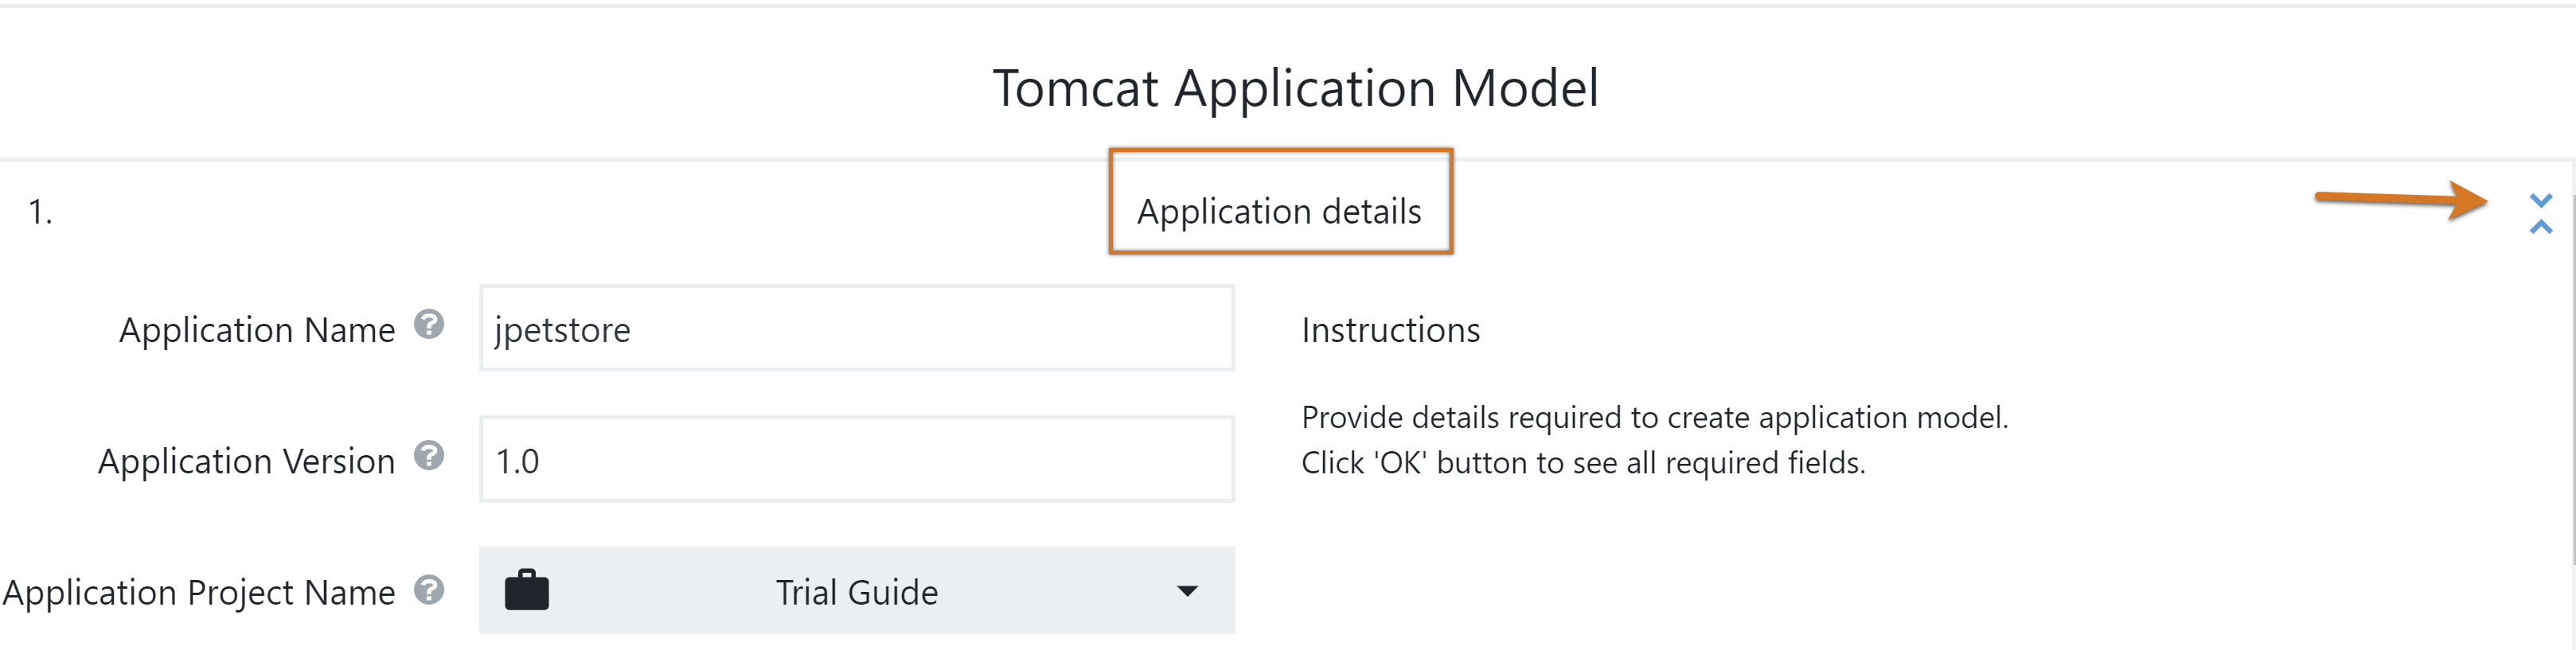 Tomcat Application details